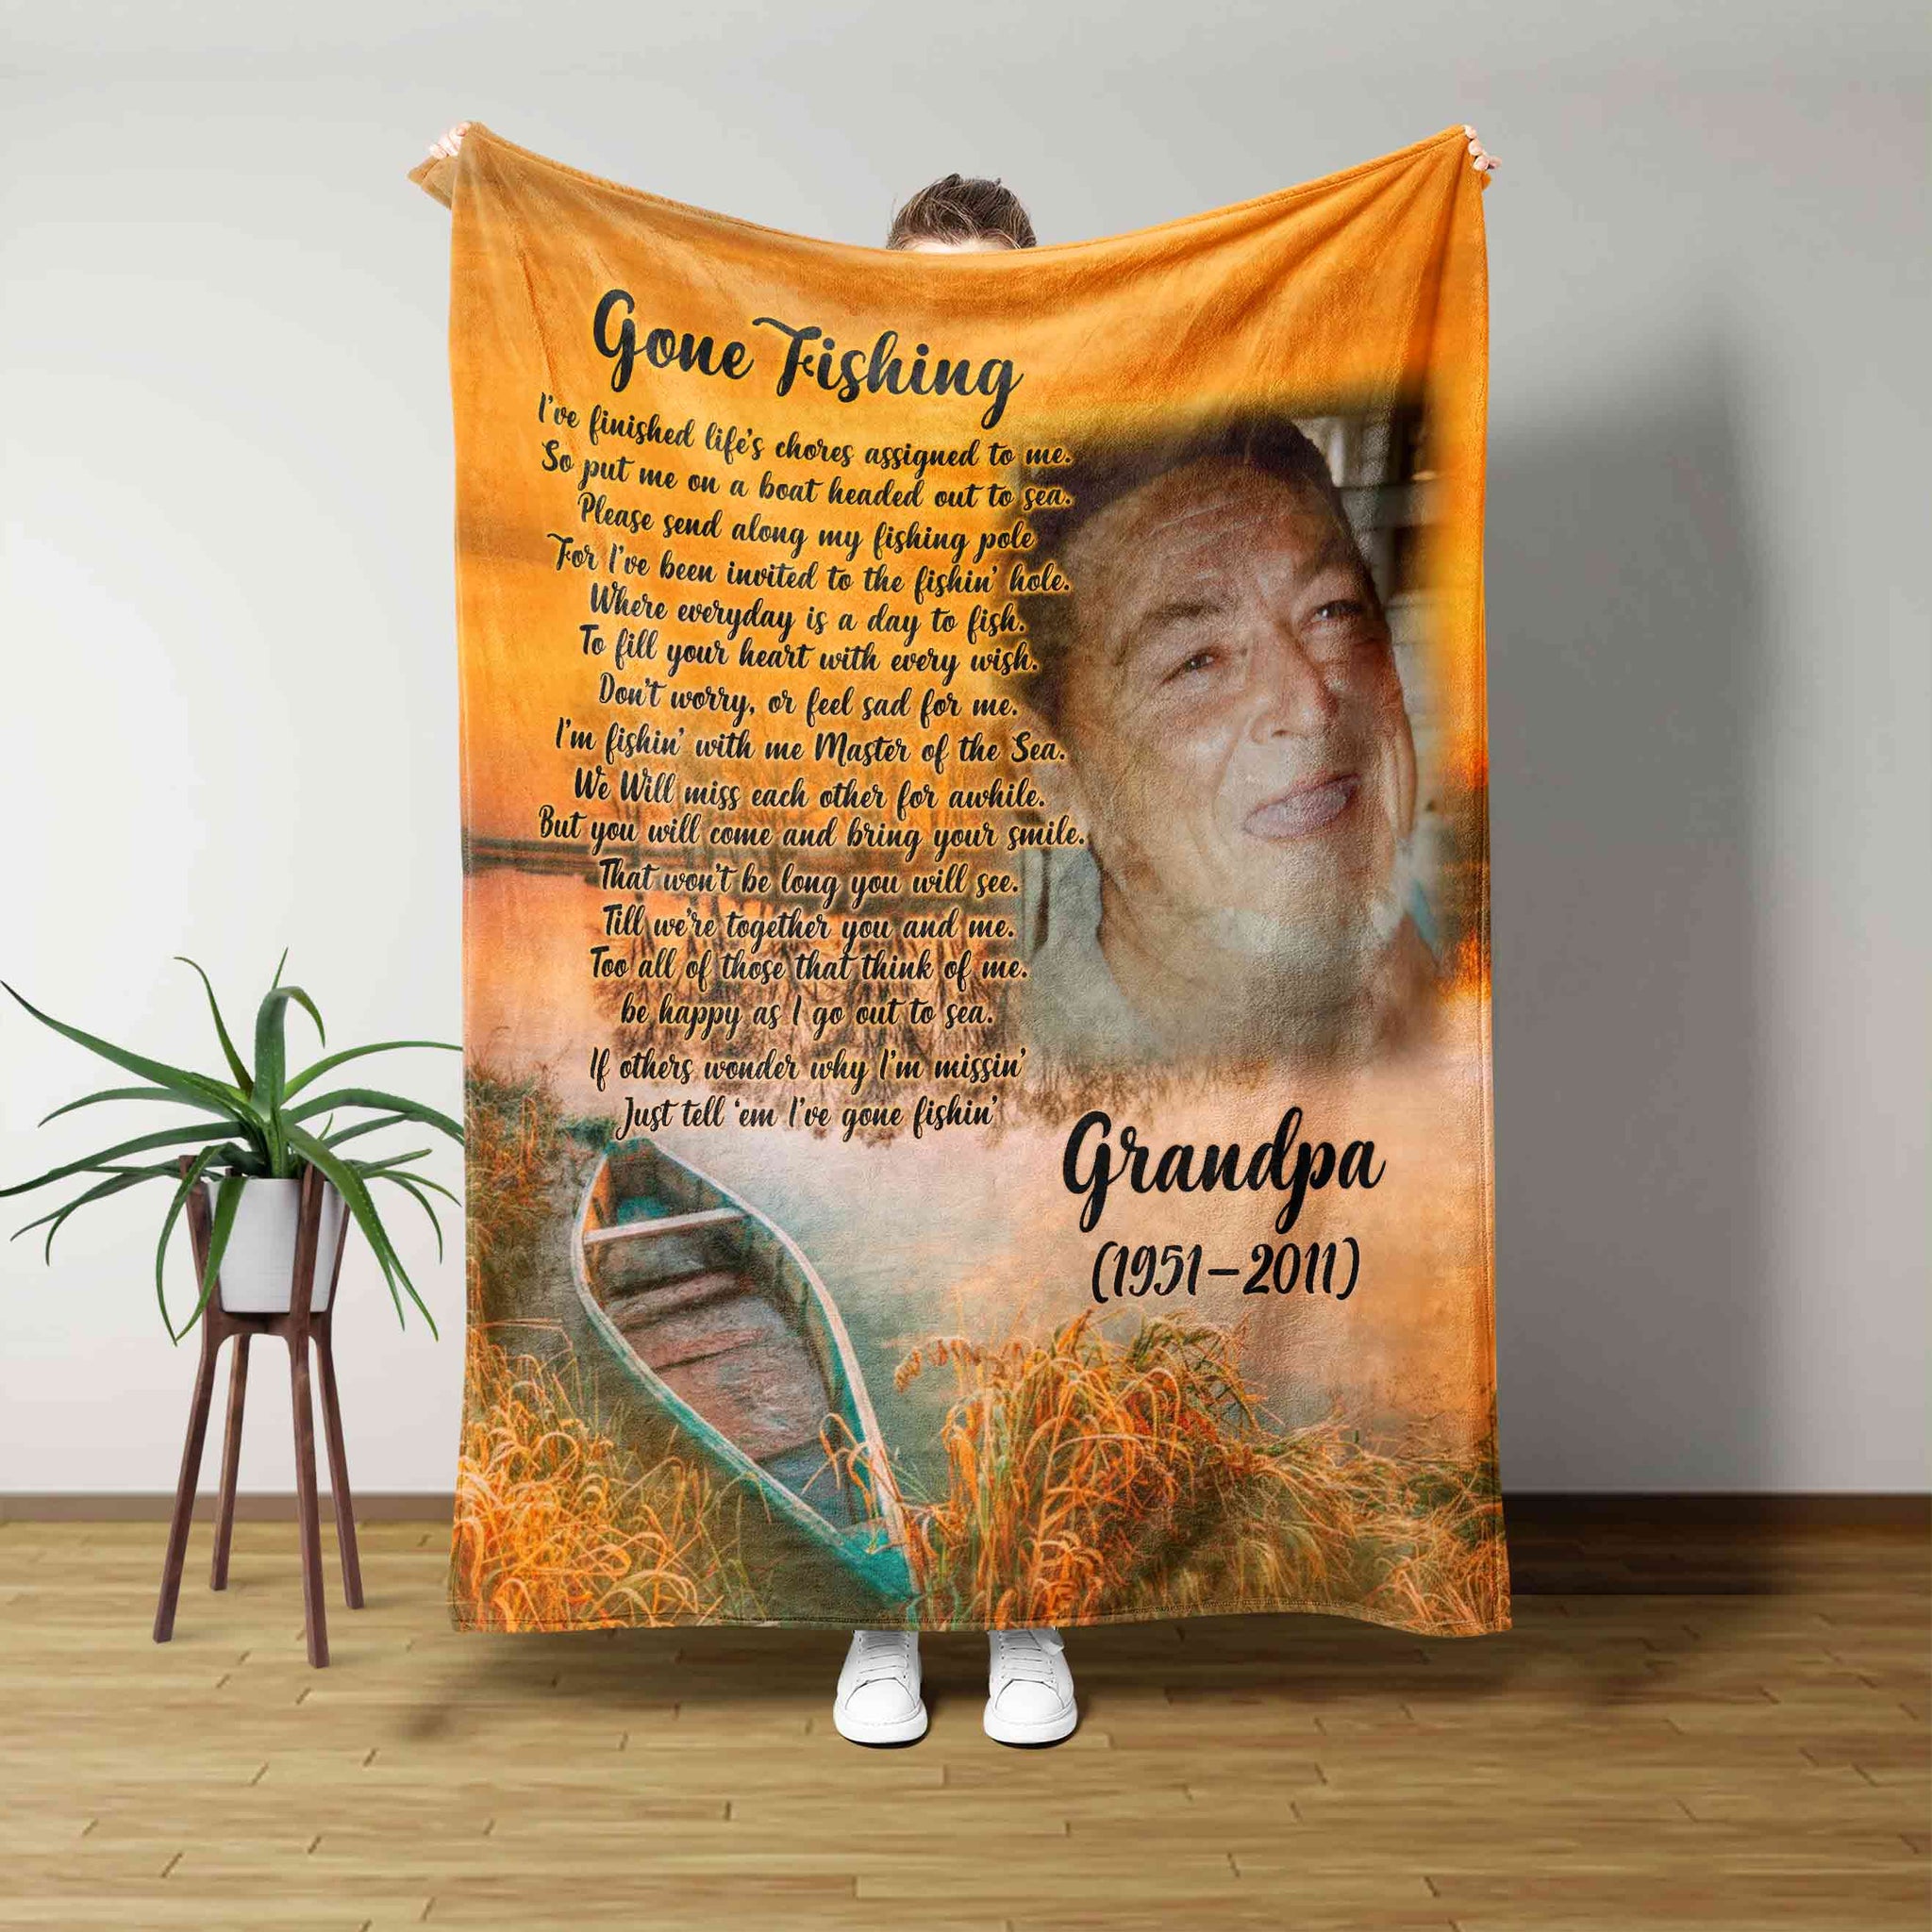 Personalized Image Blanket, Gone Fishing Blanket, Boat Blanket, Lake Blanket, Custom Name Blanket